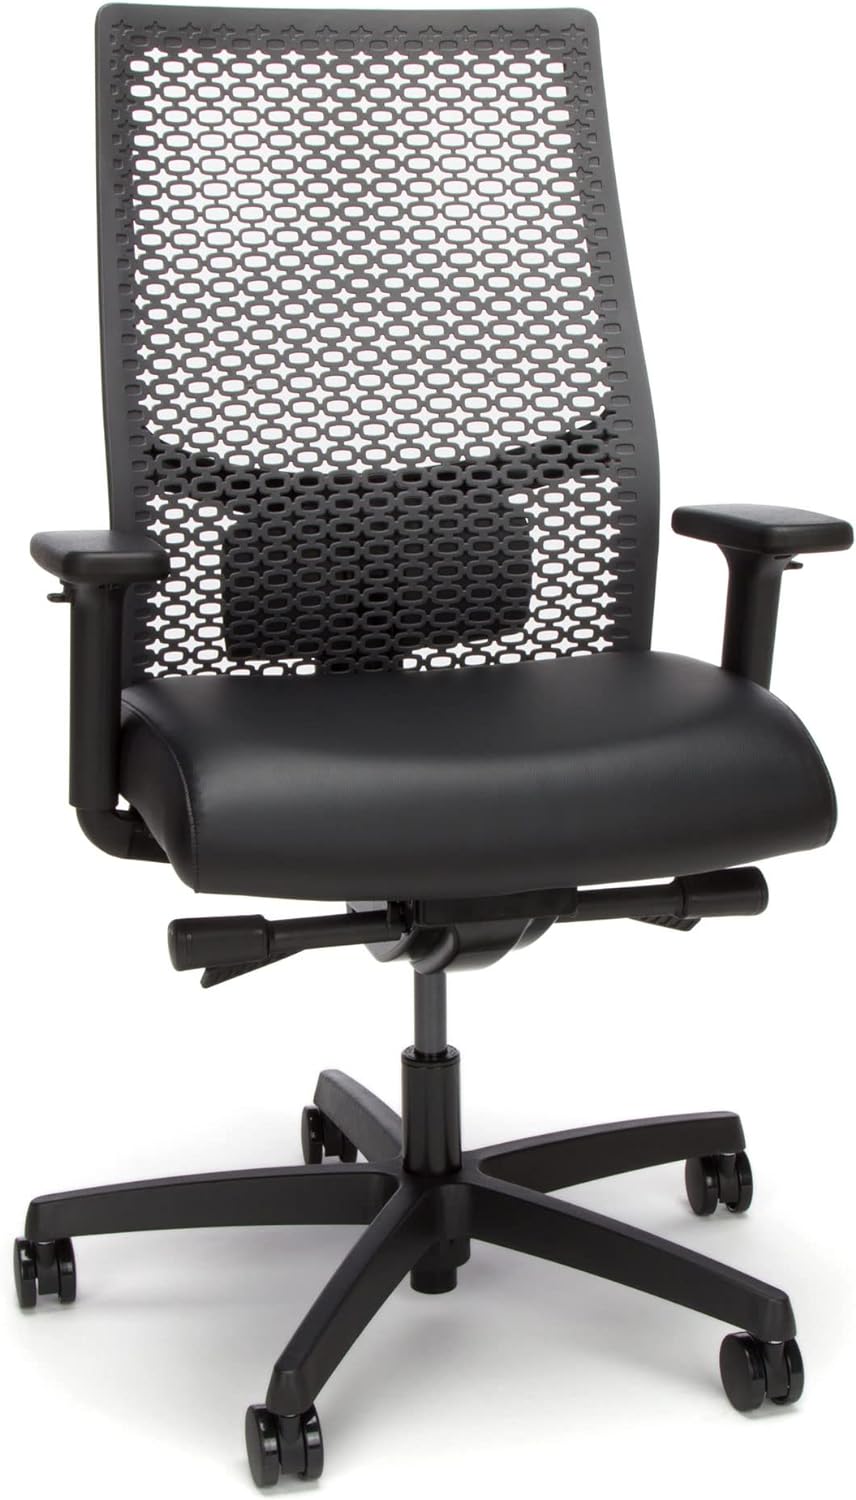 HON Ignition 2.0 ReActiv Office Chair Ergonomic Open Mesh-Style Back for High Airflow & Flex Support - Adjustable Lumbar, Synchro-Tilt Recline, Home Office Computer Desk Chair for Back Pain - Black